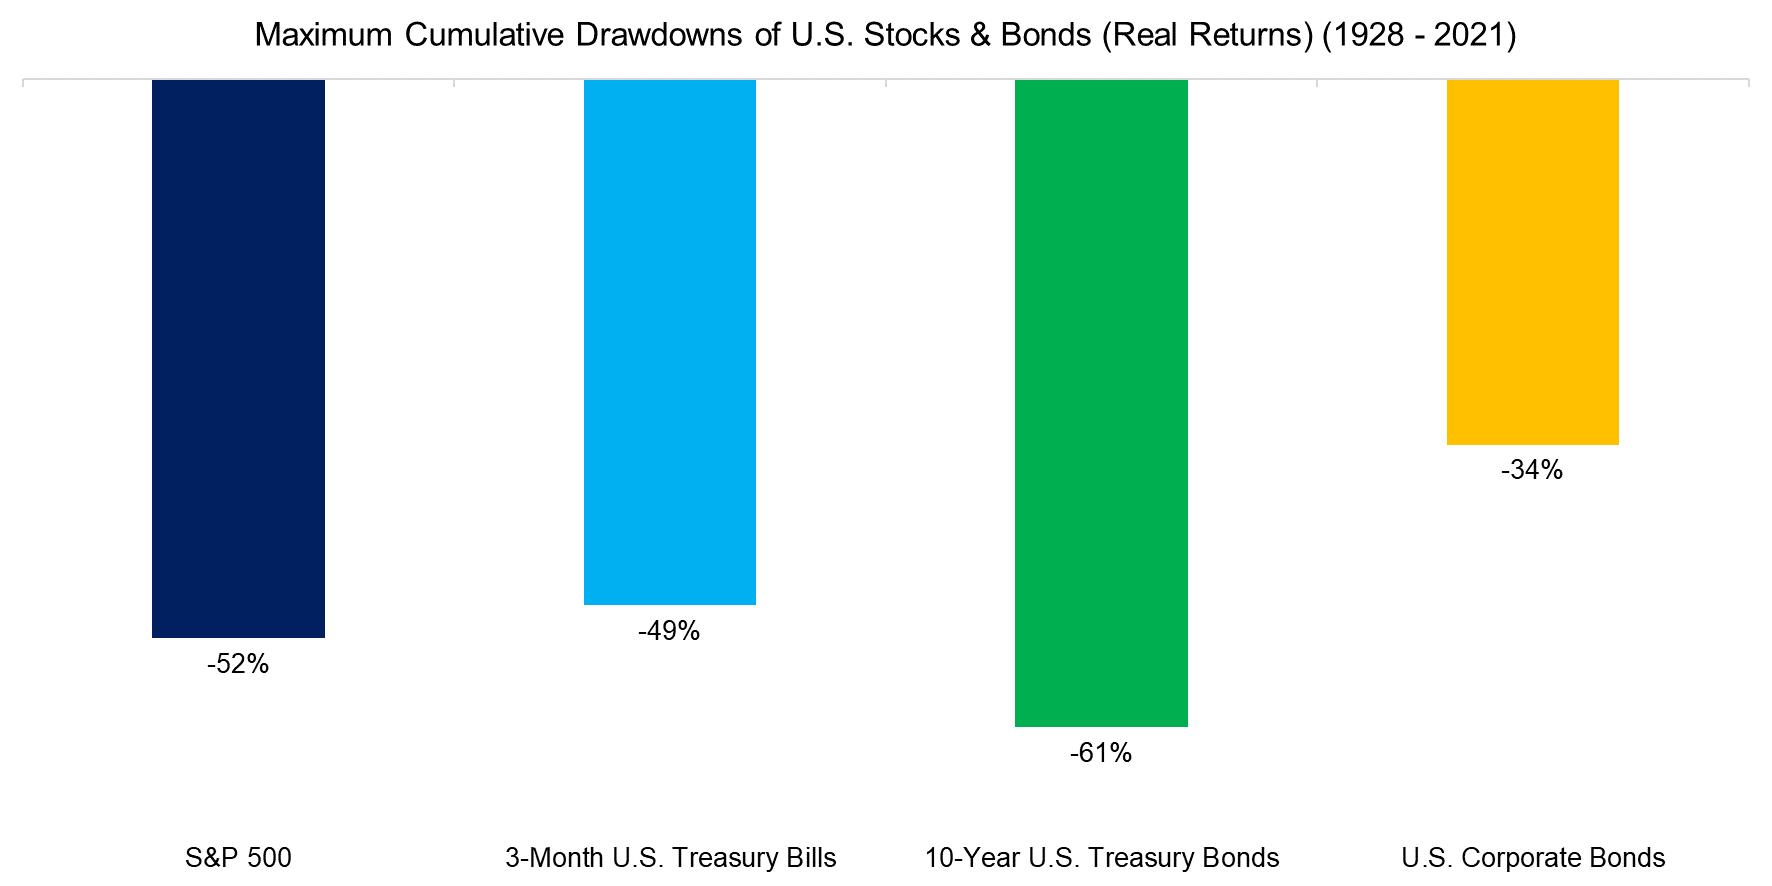 Maximum Cumulative Drawdowns of U.S. Stocks & Bonds (Real Returns) (1928 - 2021)